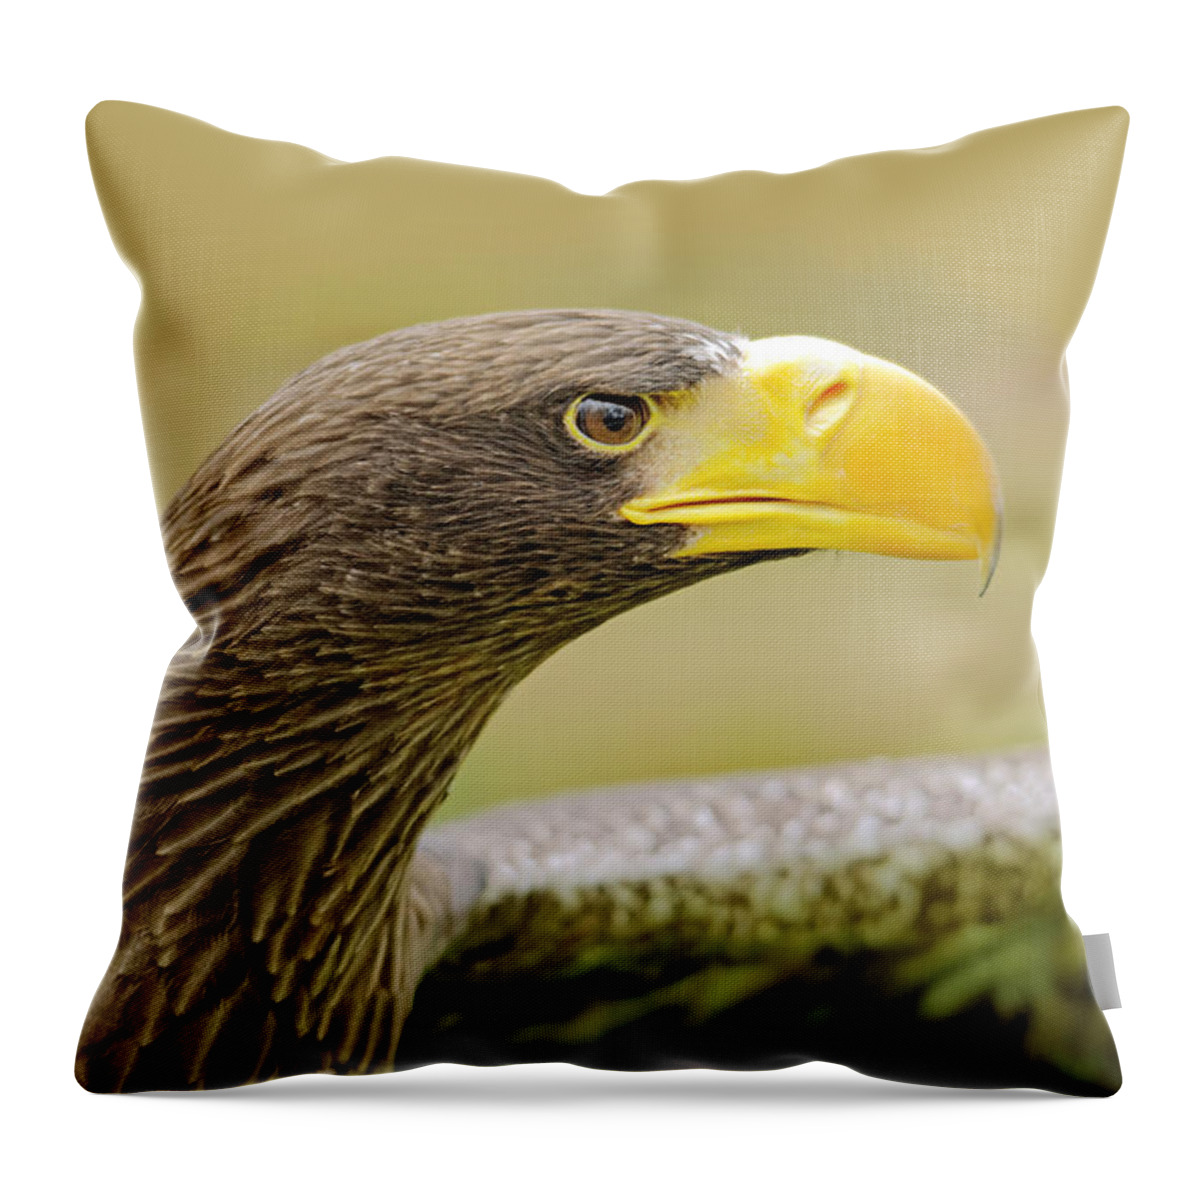 Britain Throw Pillow featuring the photograph Steller's Sea Eagle - Haliaeetus pelagicus by Rod Johnson